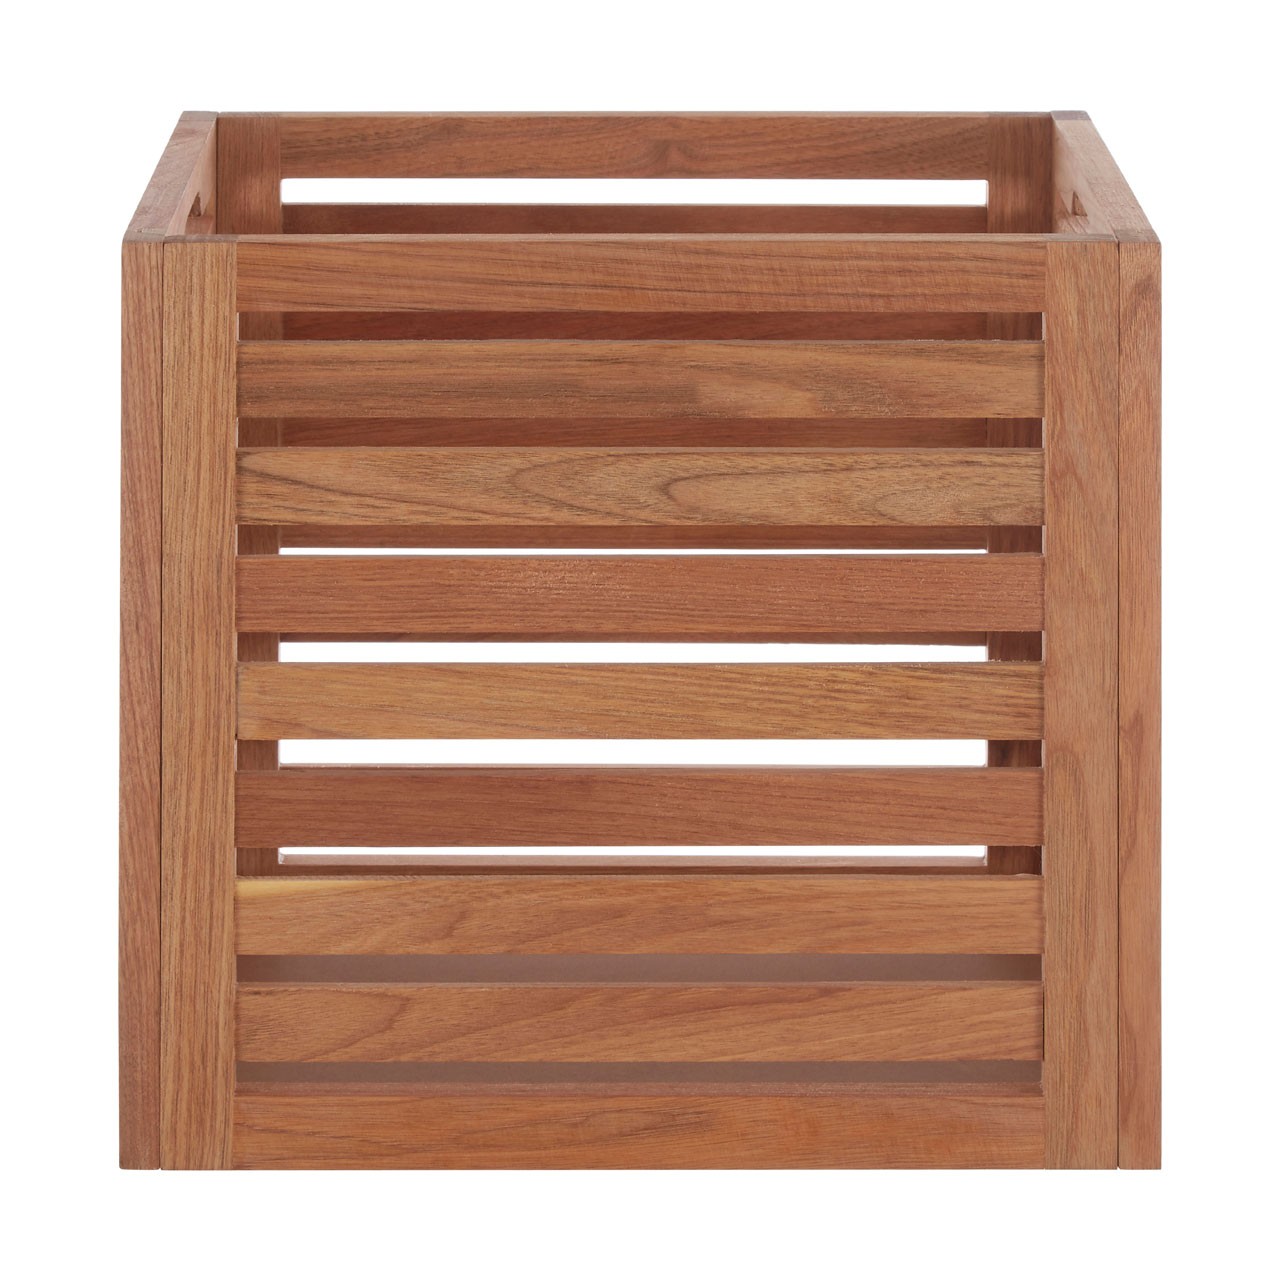 Small Walnut Wood Storage Box - Click Image to Close